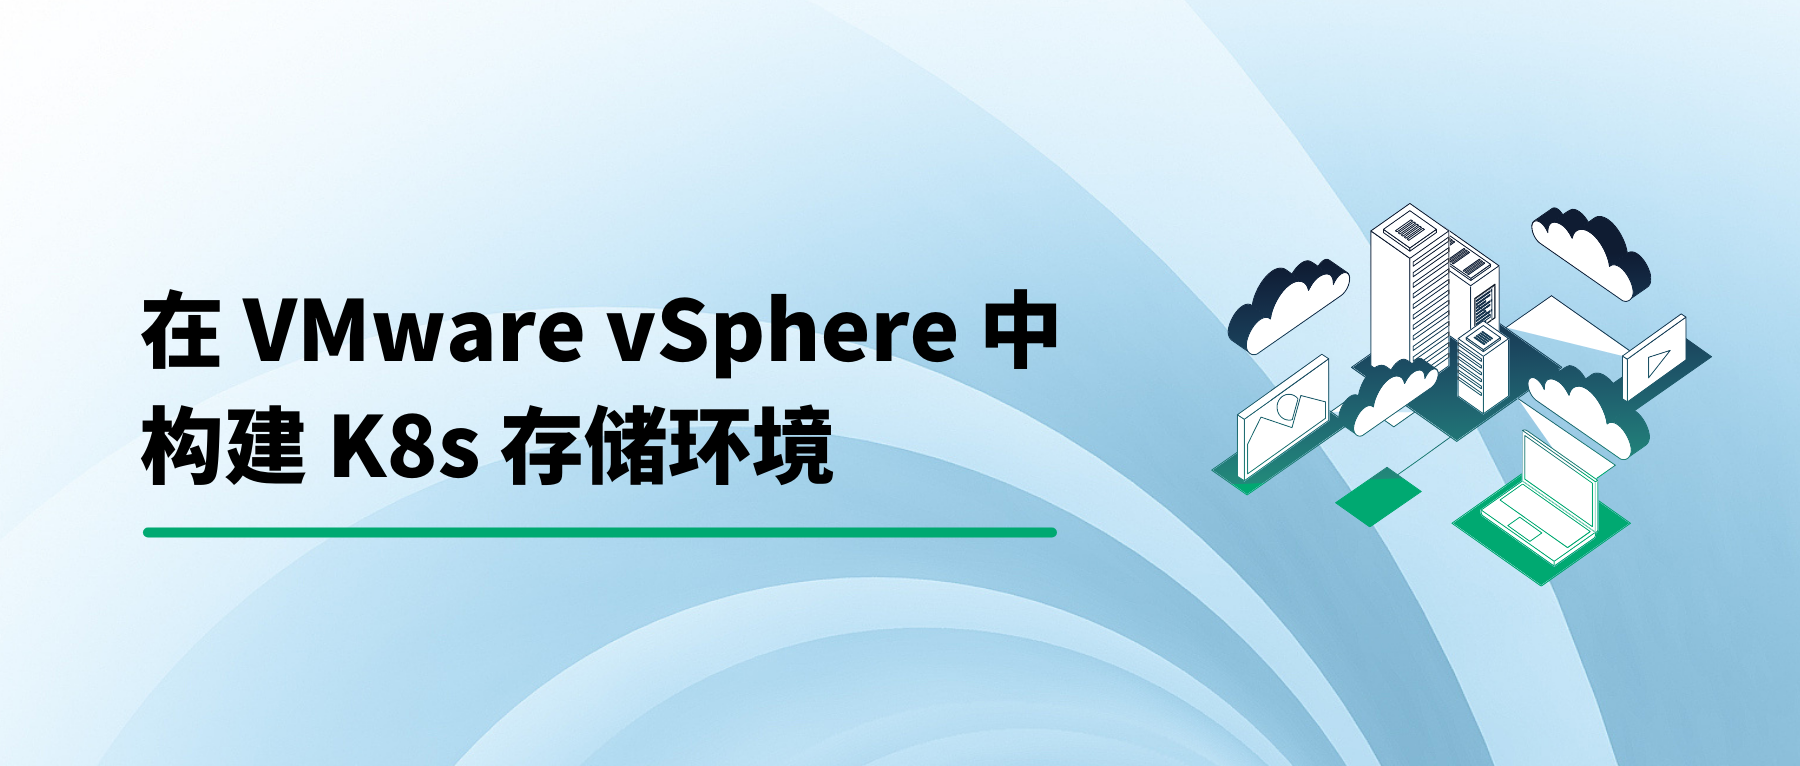 在 VMware vSphere 中构建 Kubernetes 存储环境